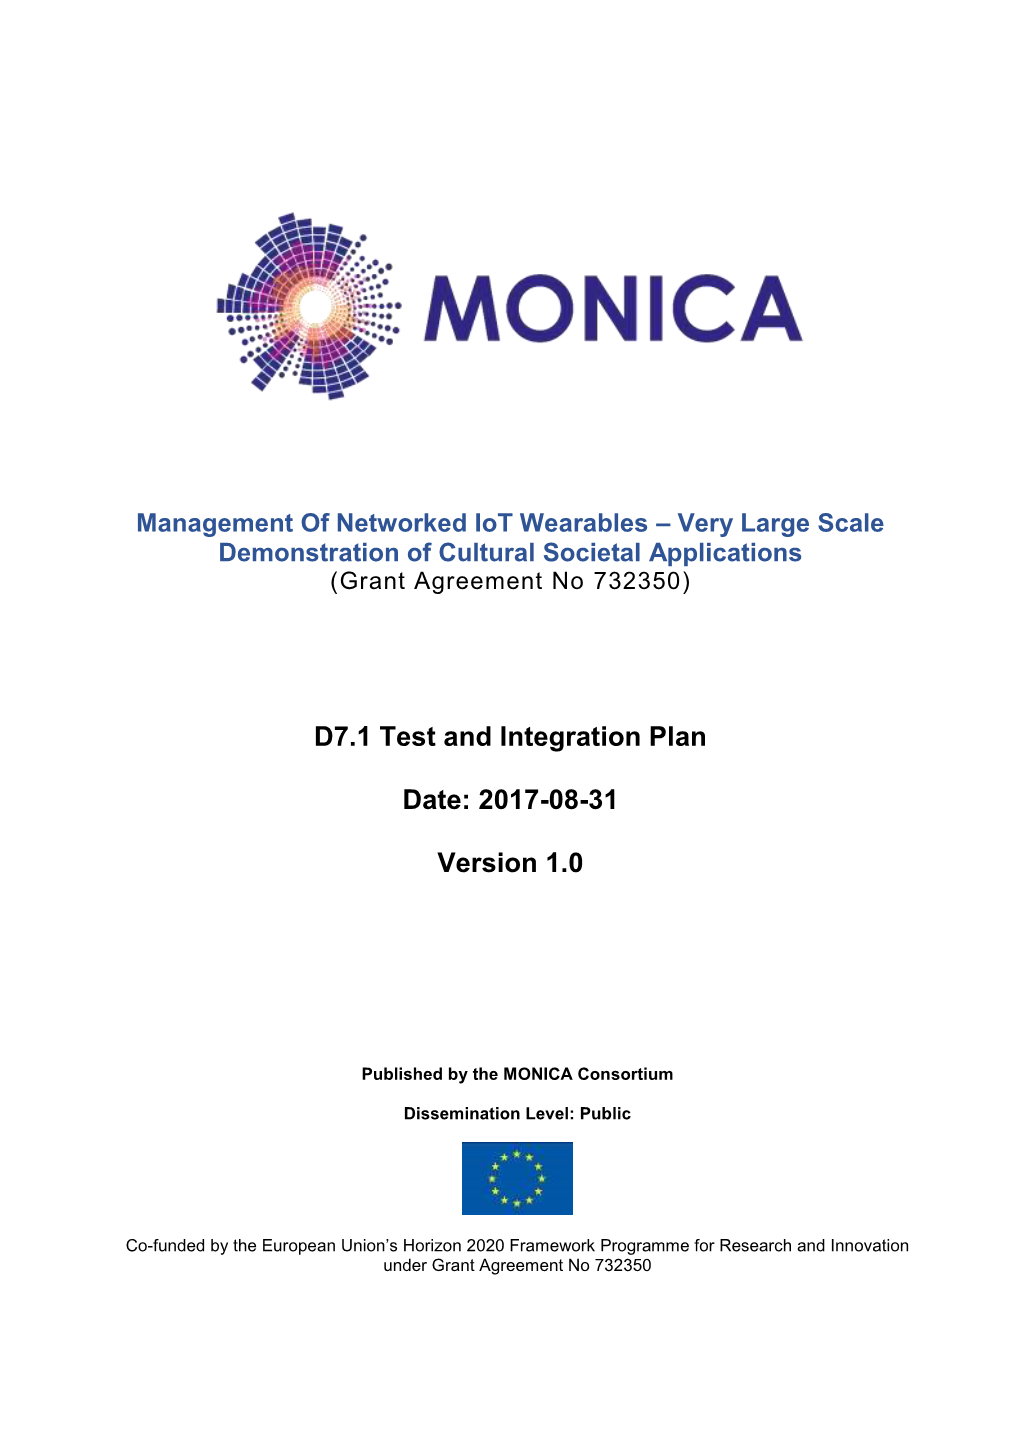 D7.1 Test and Integration Plan